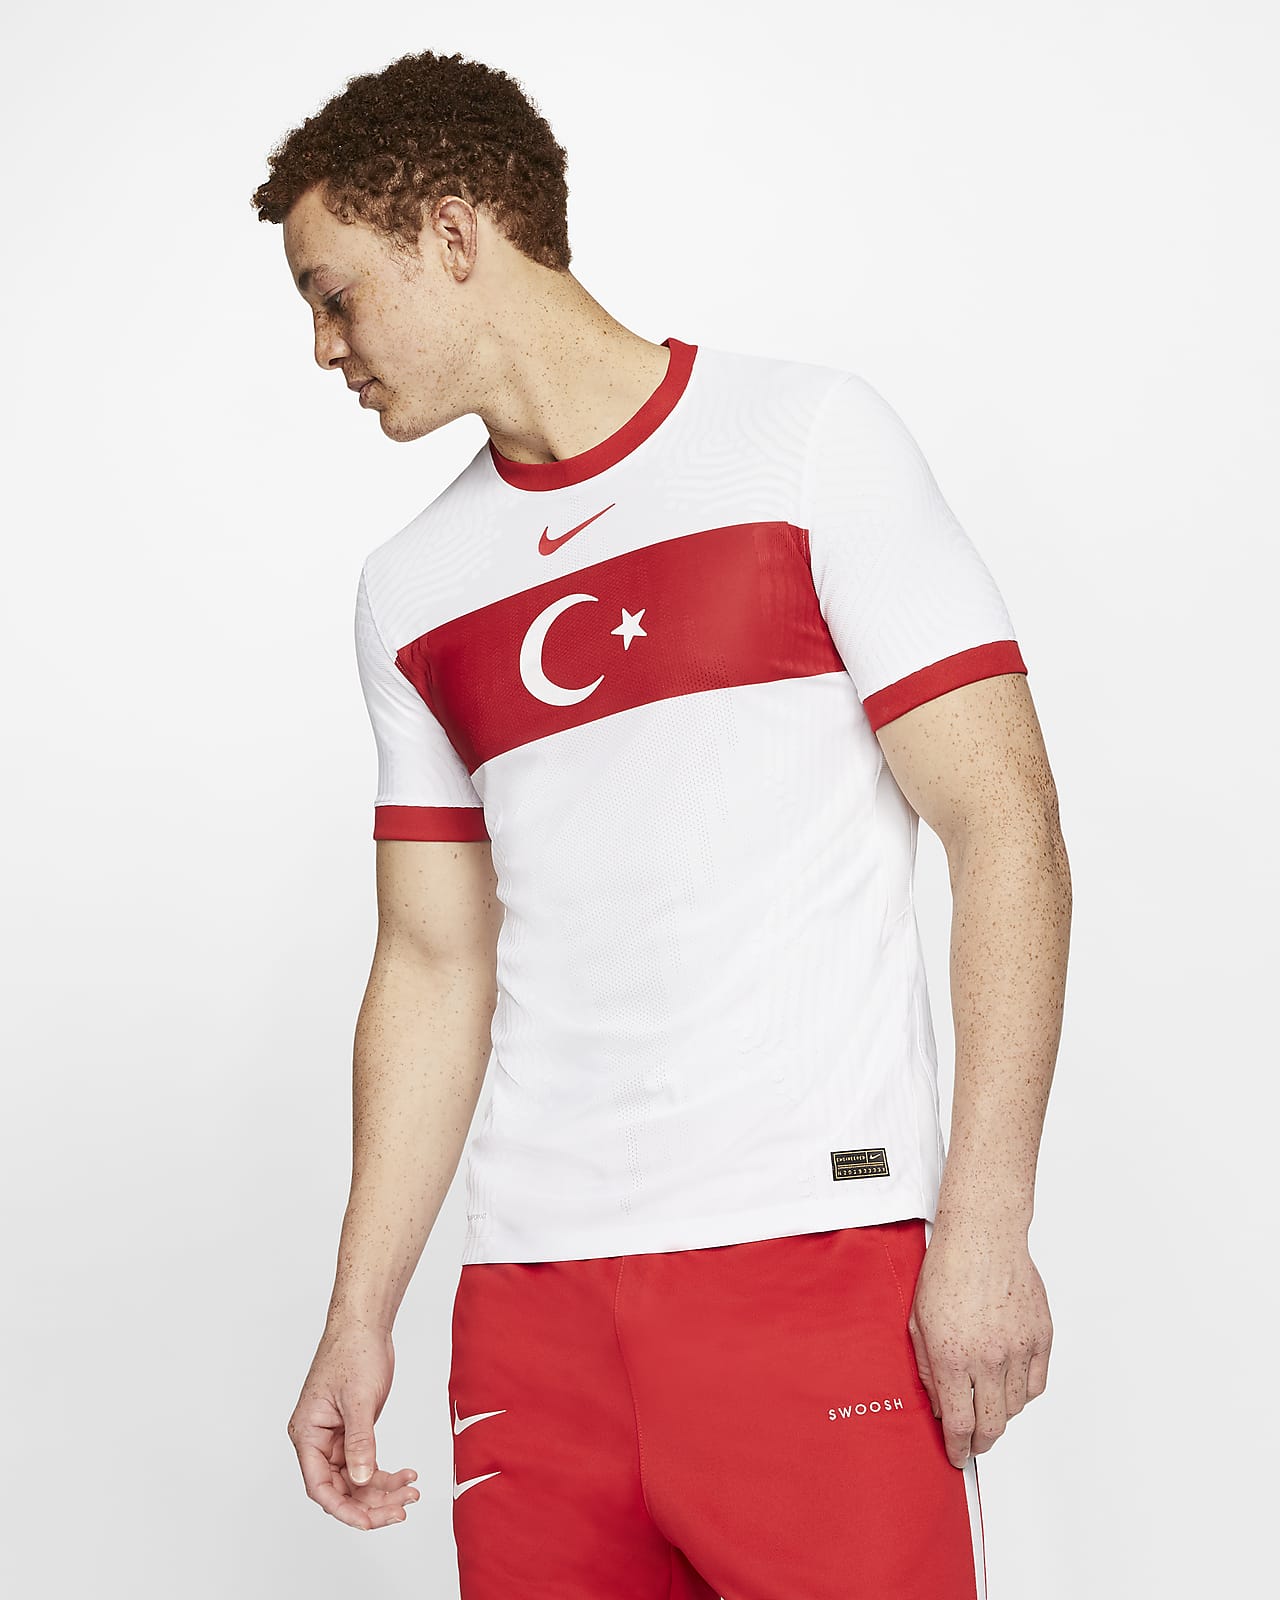 Nike Turkey футболка. Nike в Турции. Maison Nike turkiye. Джерси Турция. Найк турция сайт